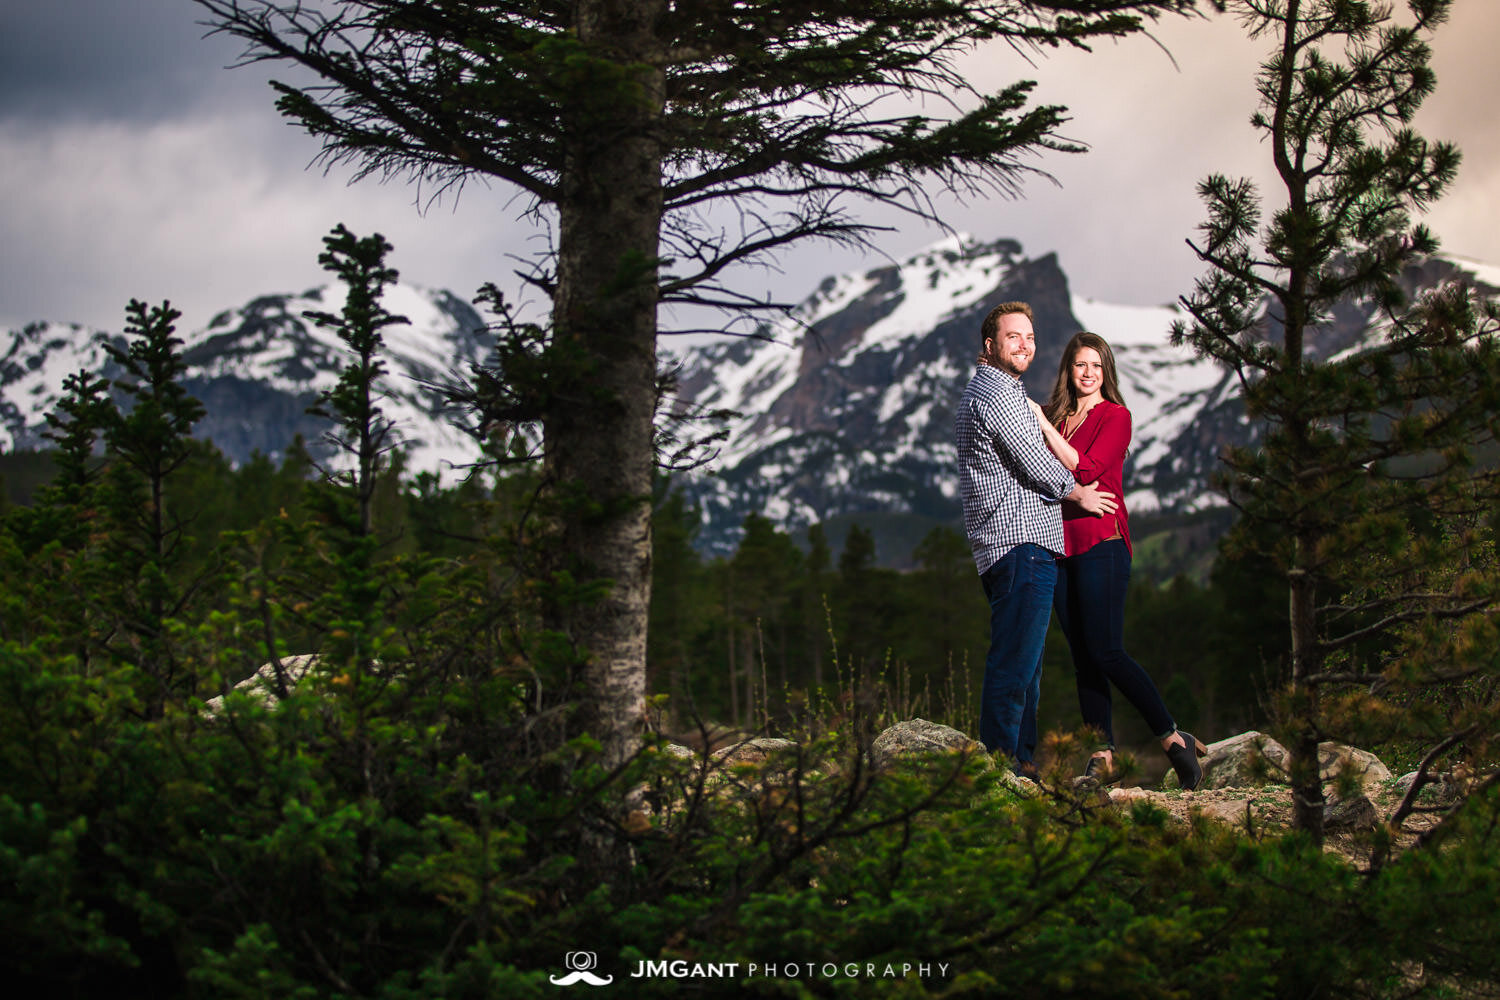  Rocky Mountain National Park Engagement Photography by JMGant Photography. Estes Park, Winter Park, Vail, Aspen Steamboat Springs Wedding photographer. 